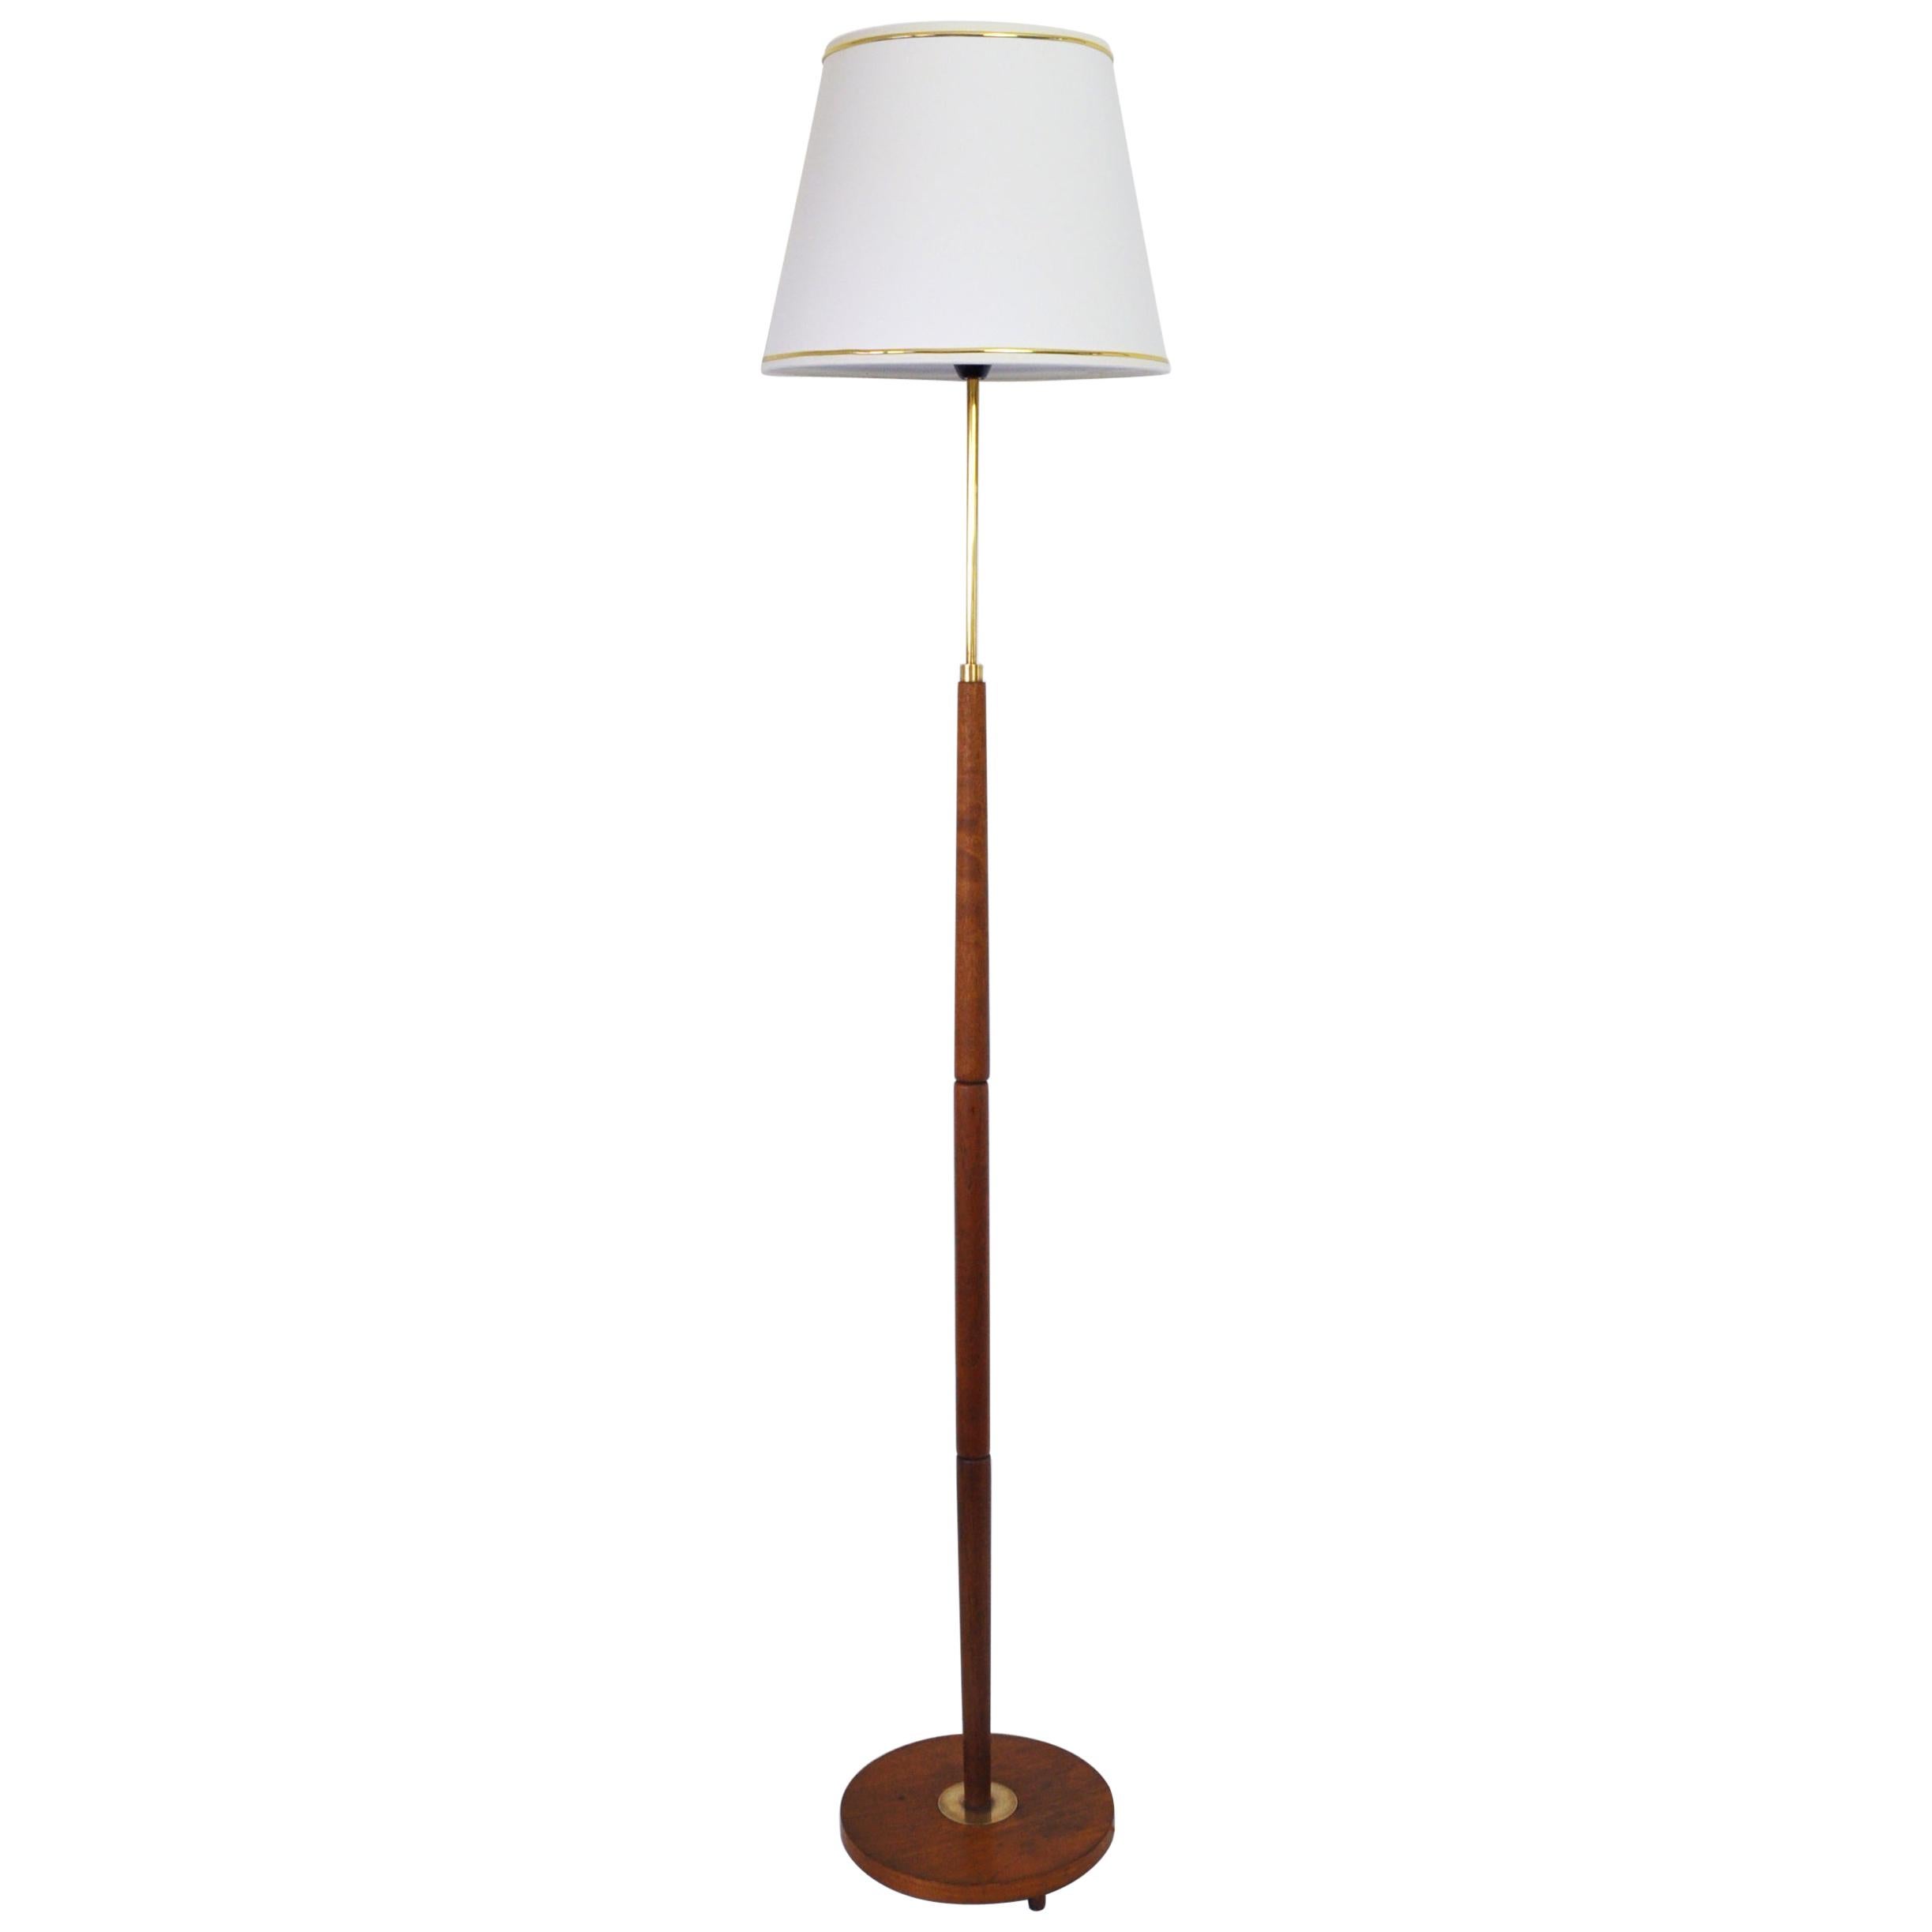 Mid-Century Modern Danish Floor Lamp with Brass Details, 1960s